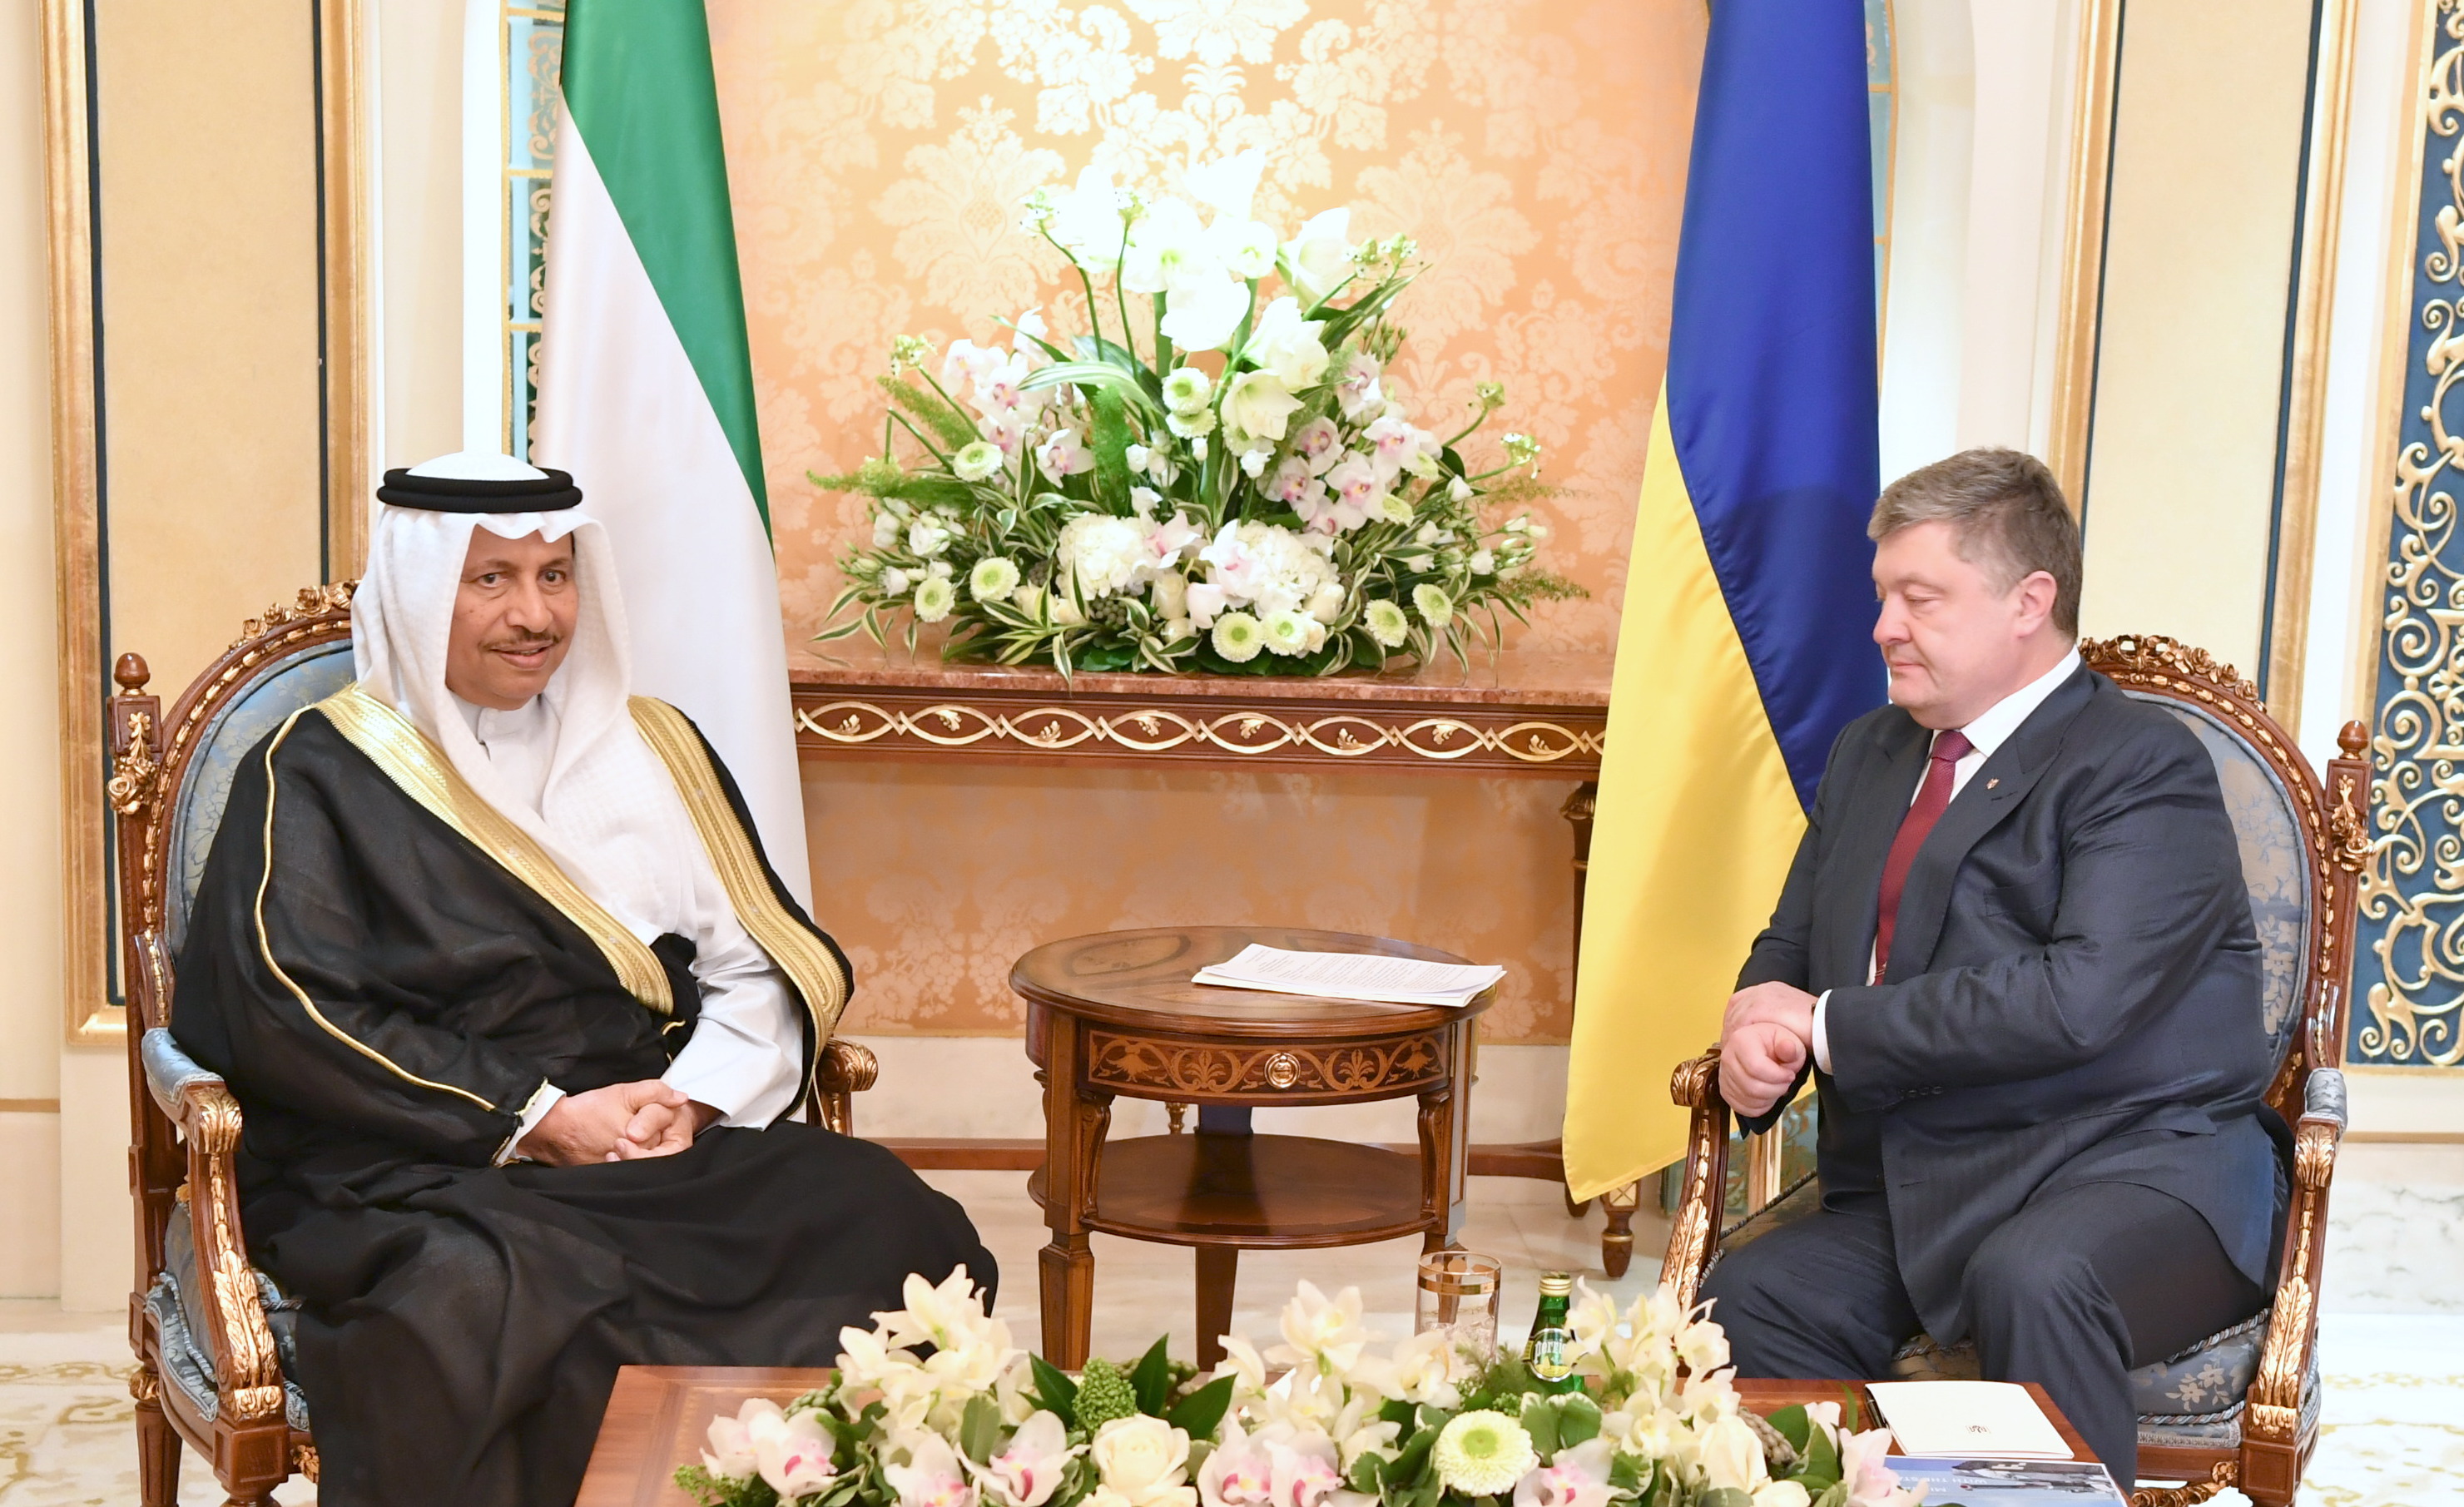 Visiting Ukrainian President Petro Poroshenko meets with His Highness the Prime Minister Sheikh Jaber Al-Mubarak Al-Hamad Al-Sabah